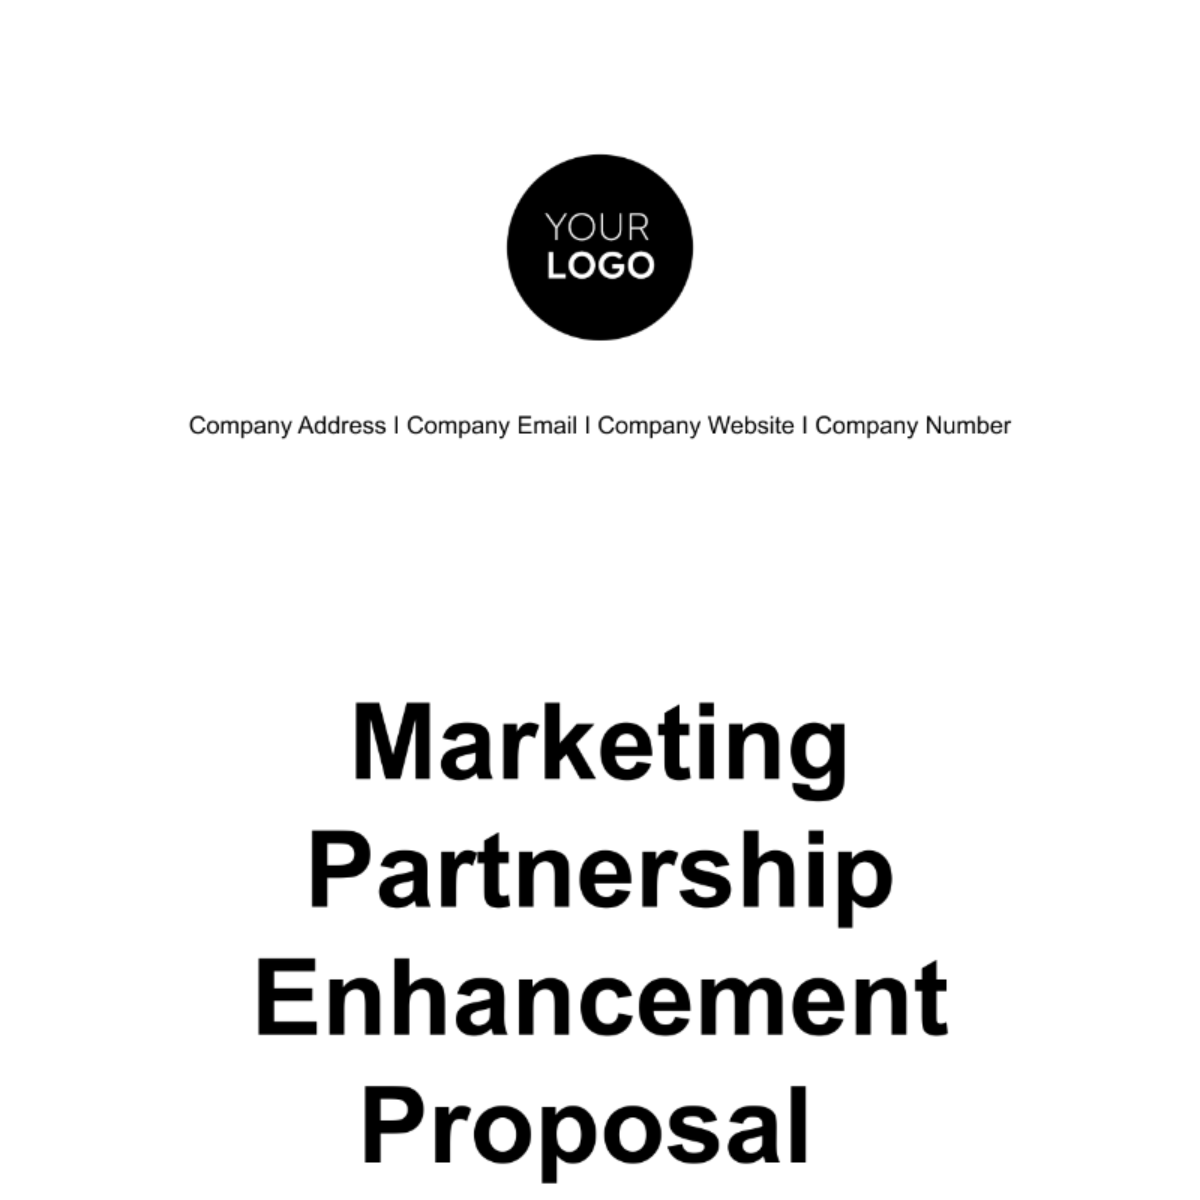 Free Marketing Partnership Enhancement Proposal Template